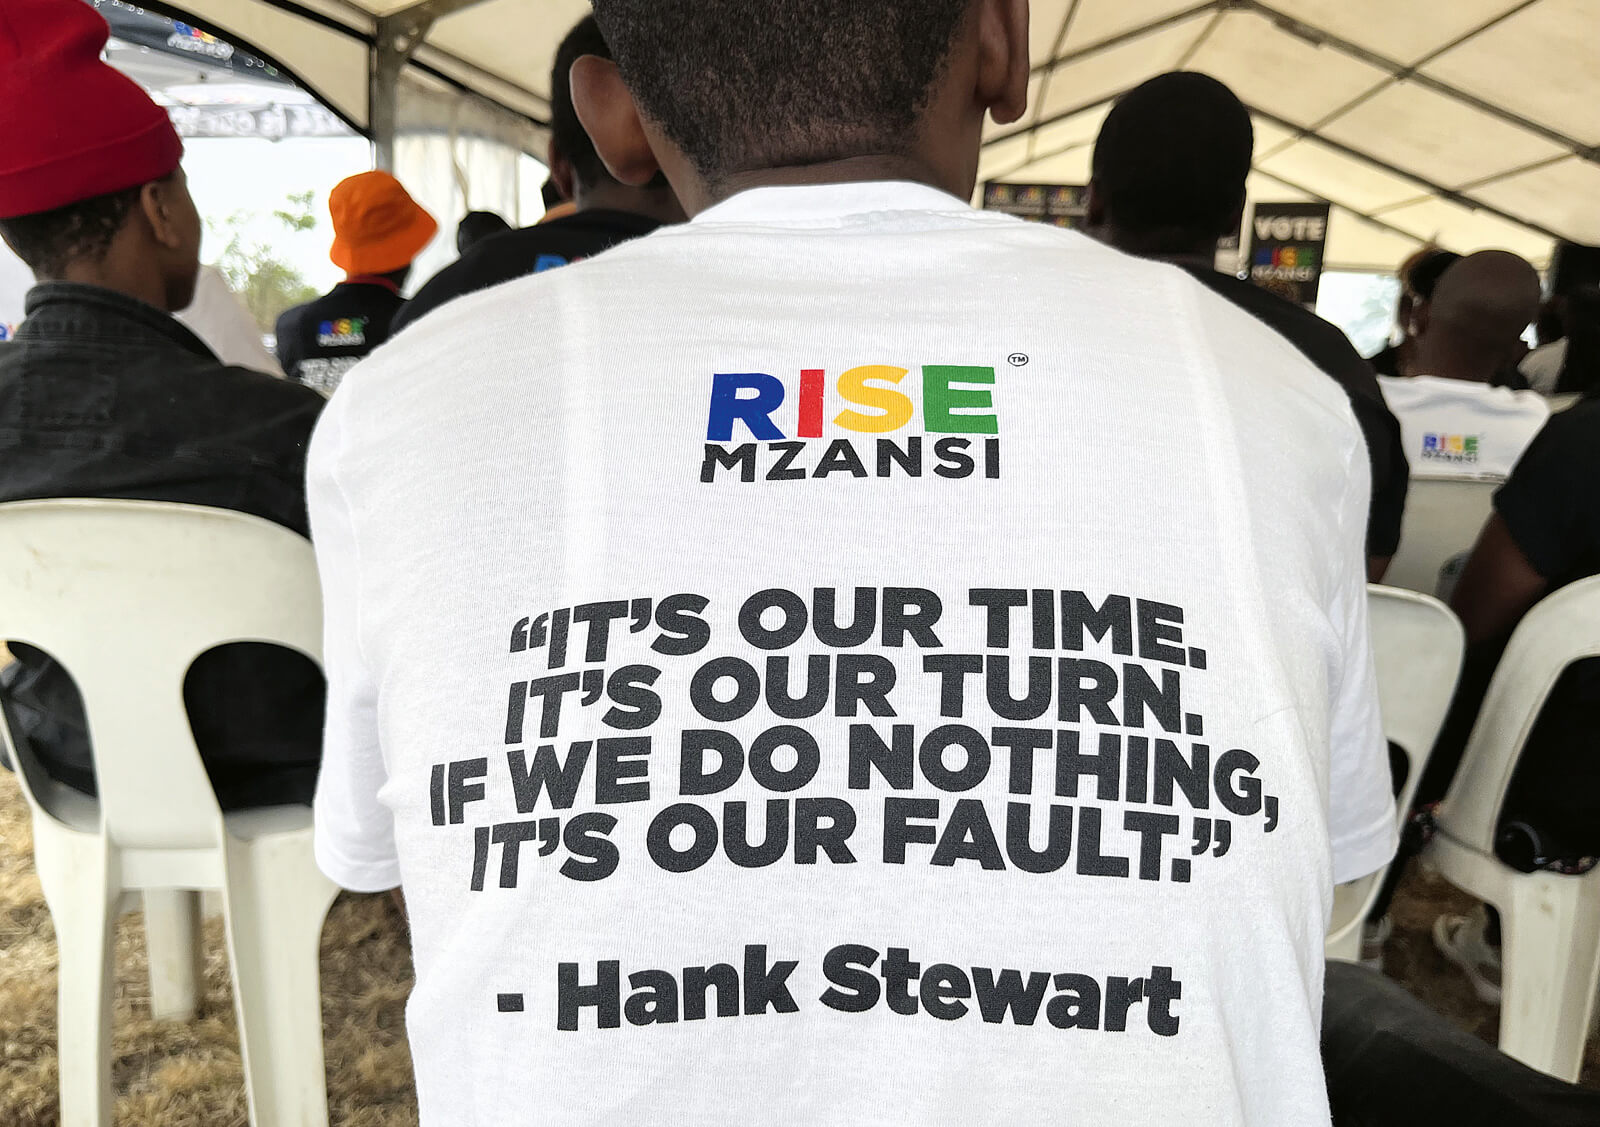 Auf der Rückseite eines Wahl-T-Shirt steht: Rise Mzansi "It's our time. It's our tourn. If we do nothing, it's our fault." - Hank Steward